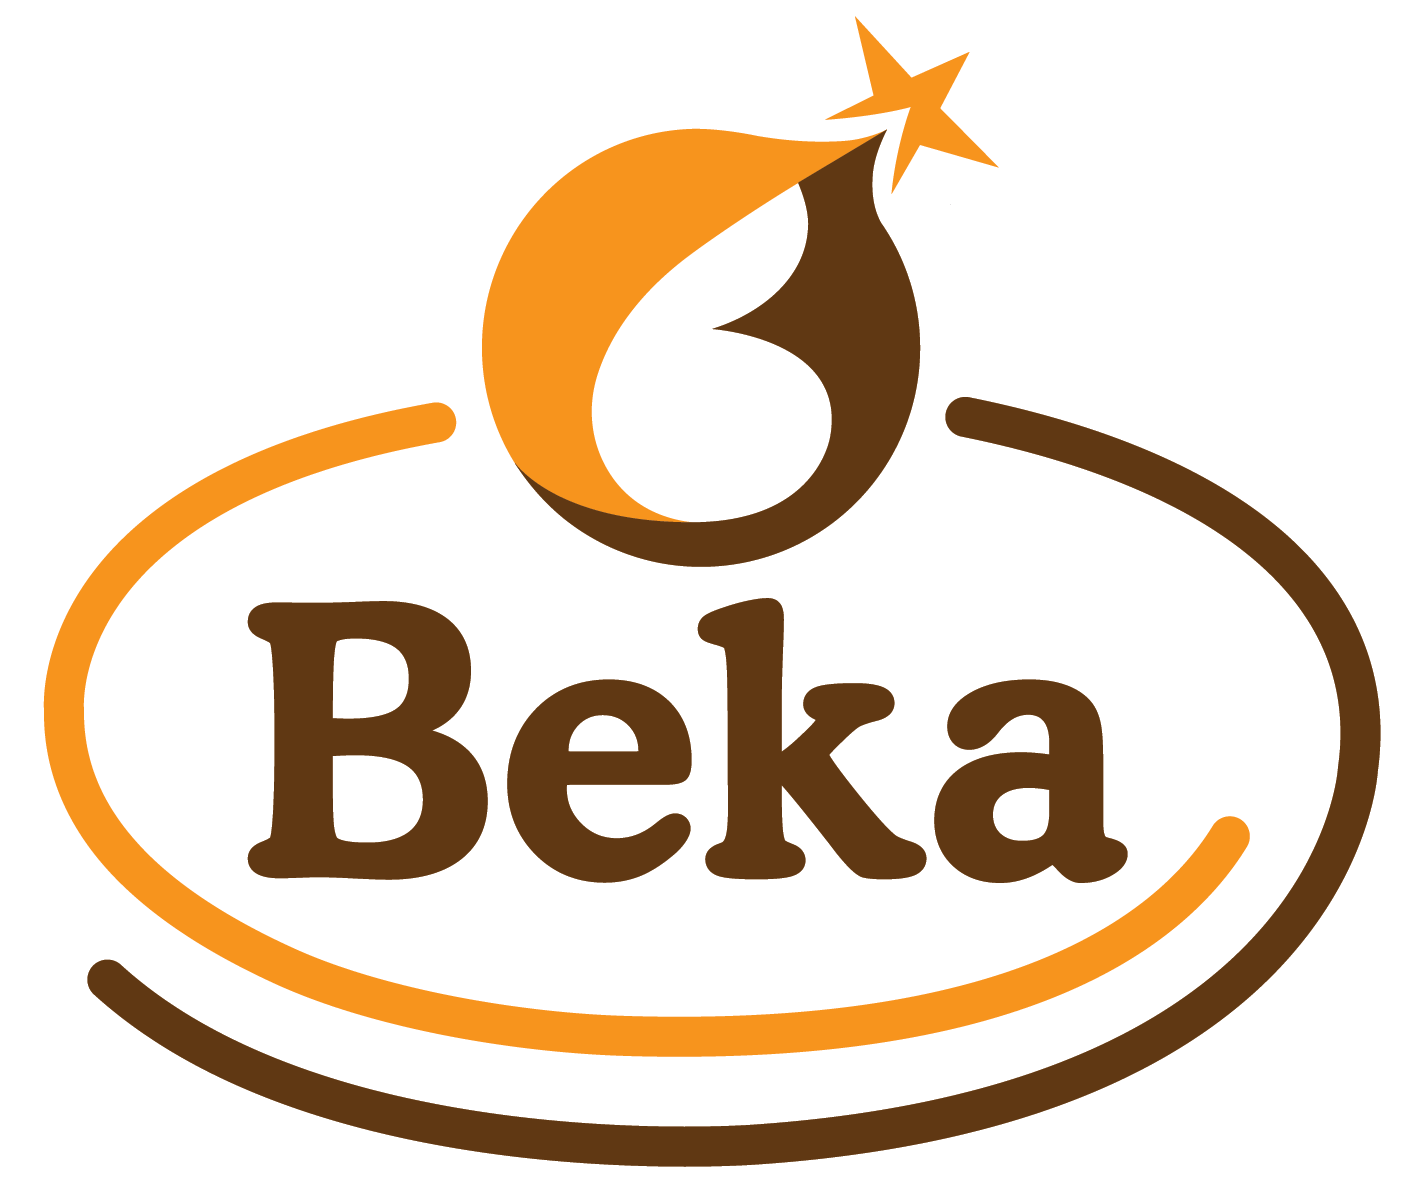 Beka General Business